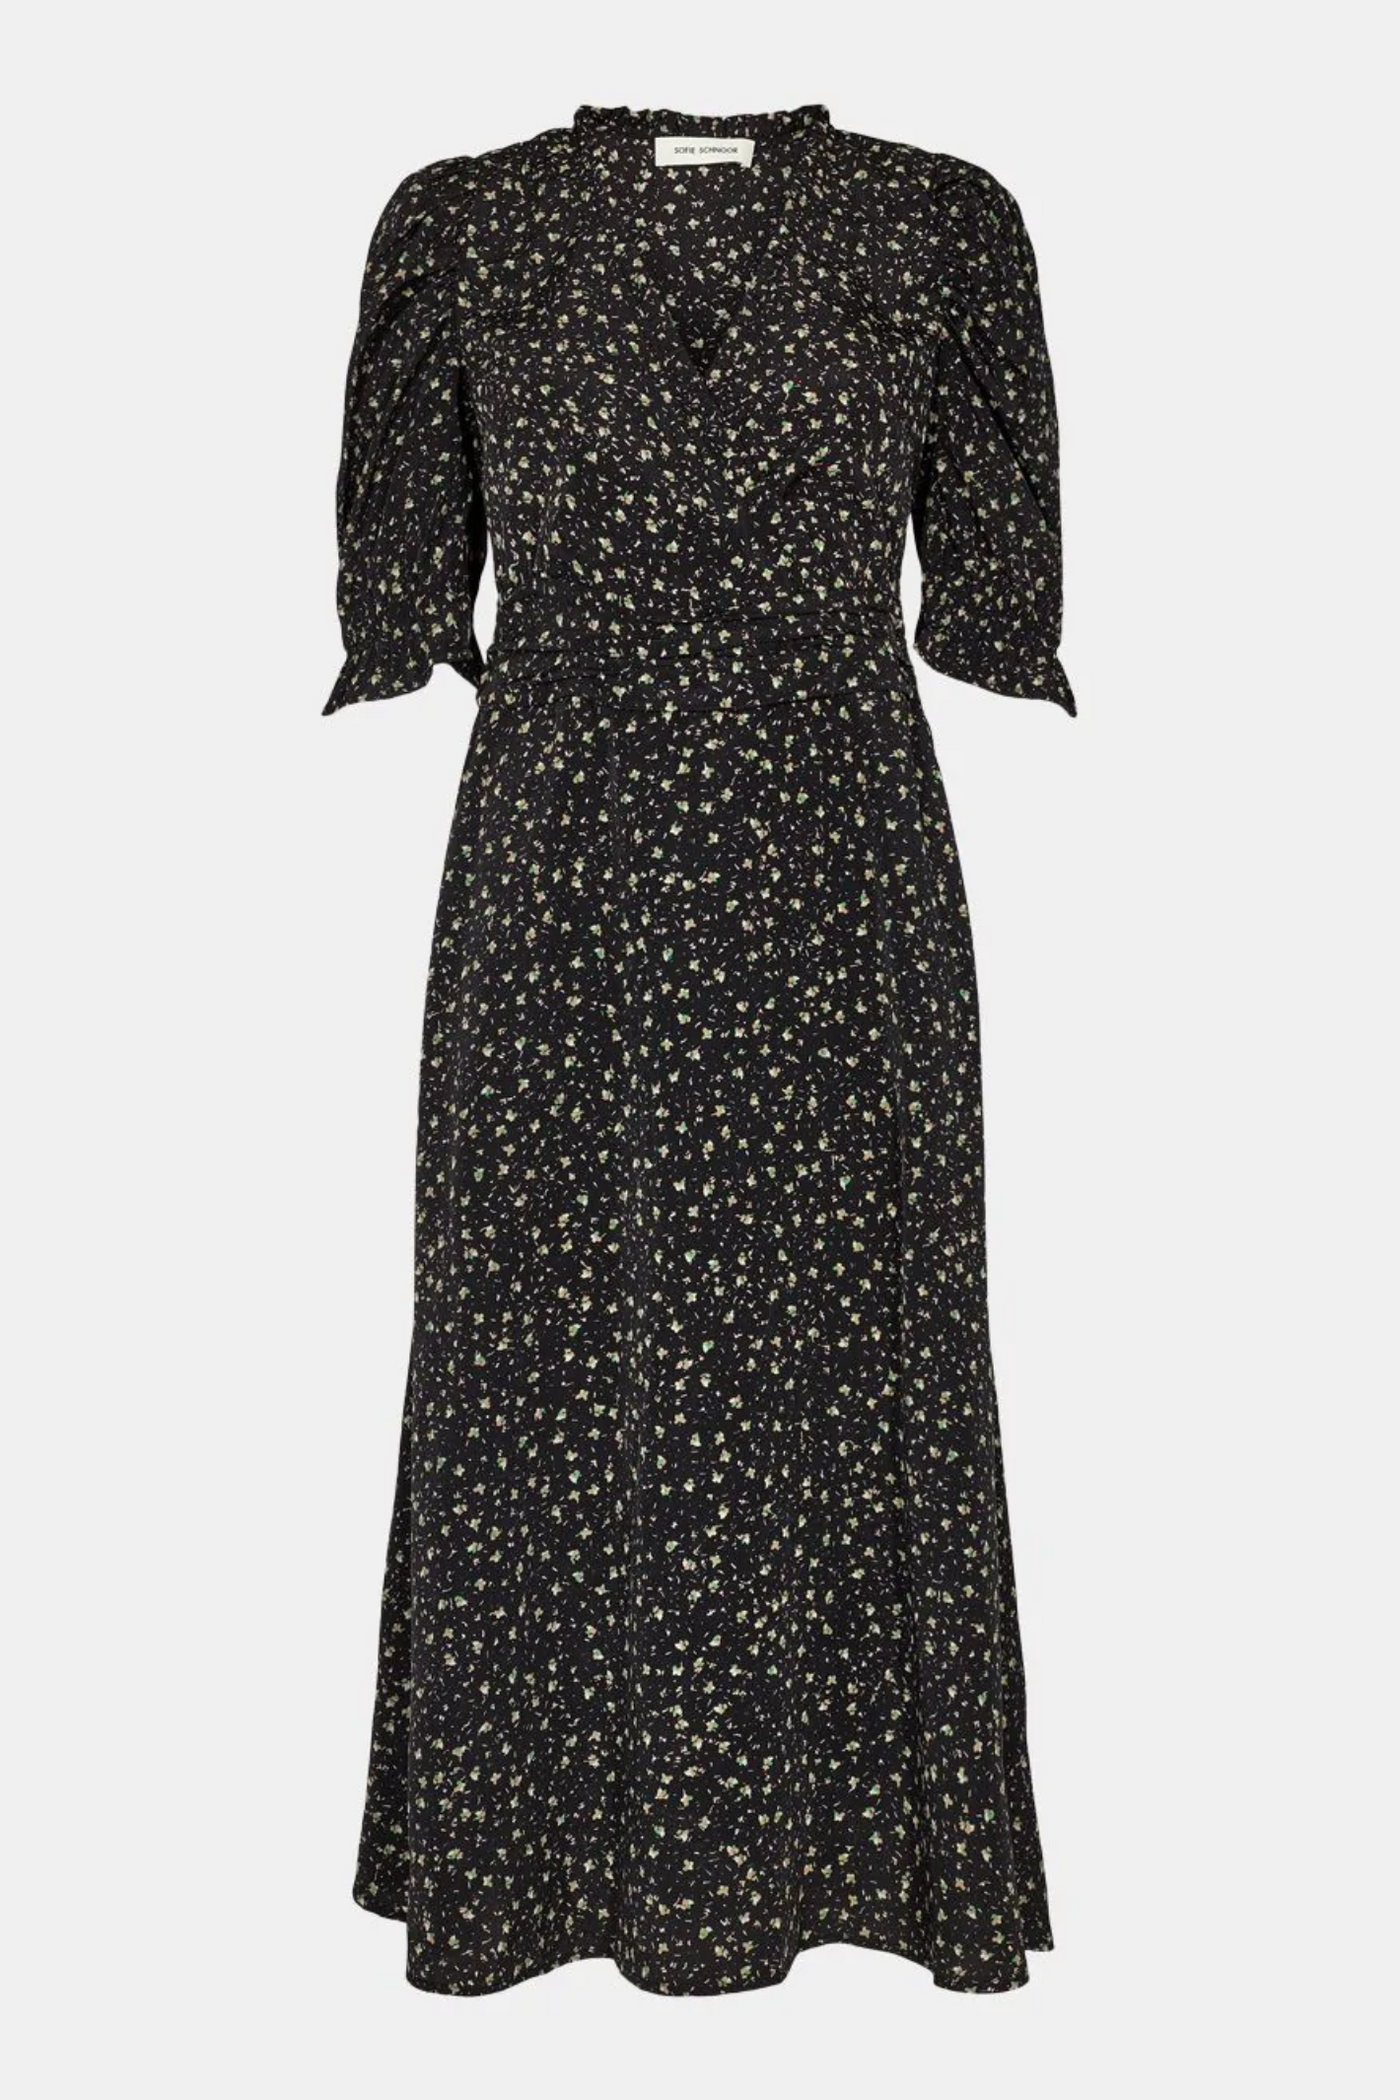 Sofie Schnoor Black Floral Dress | Jezabel Boutique